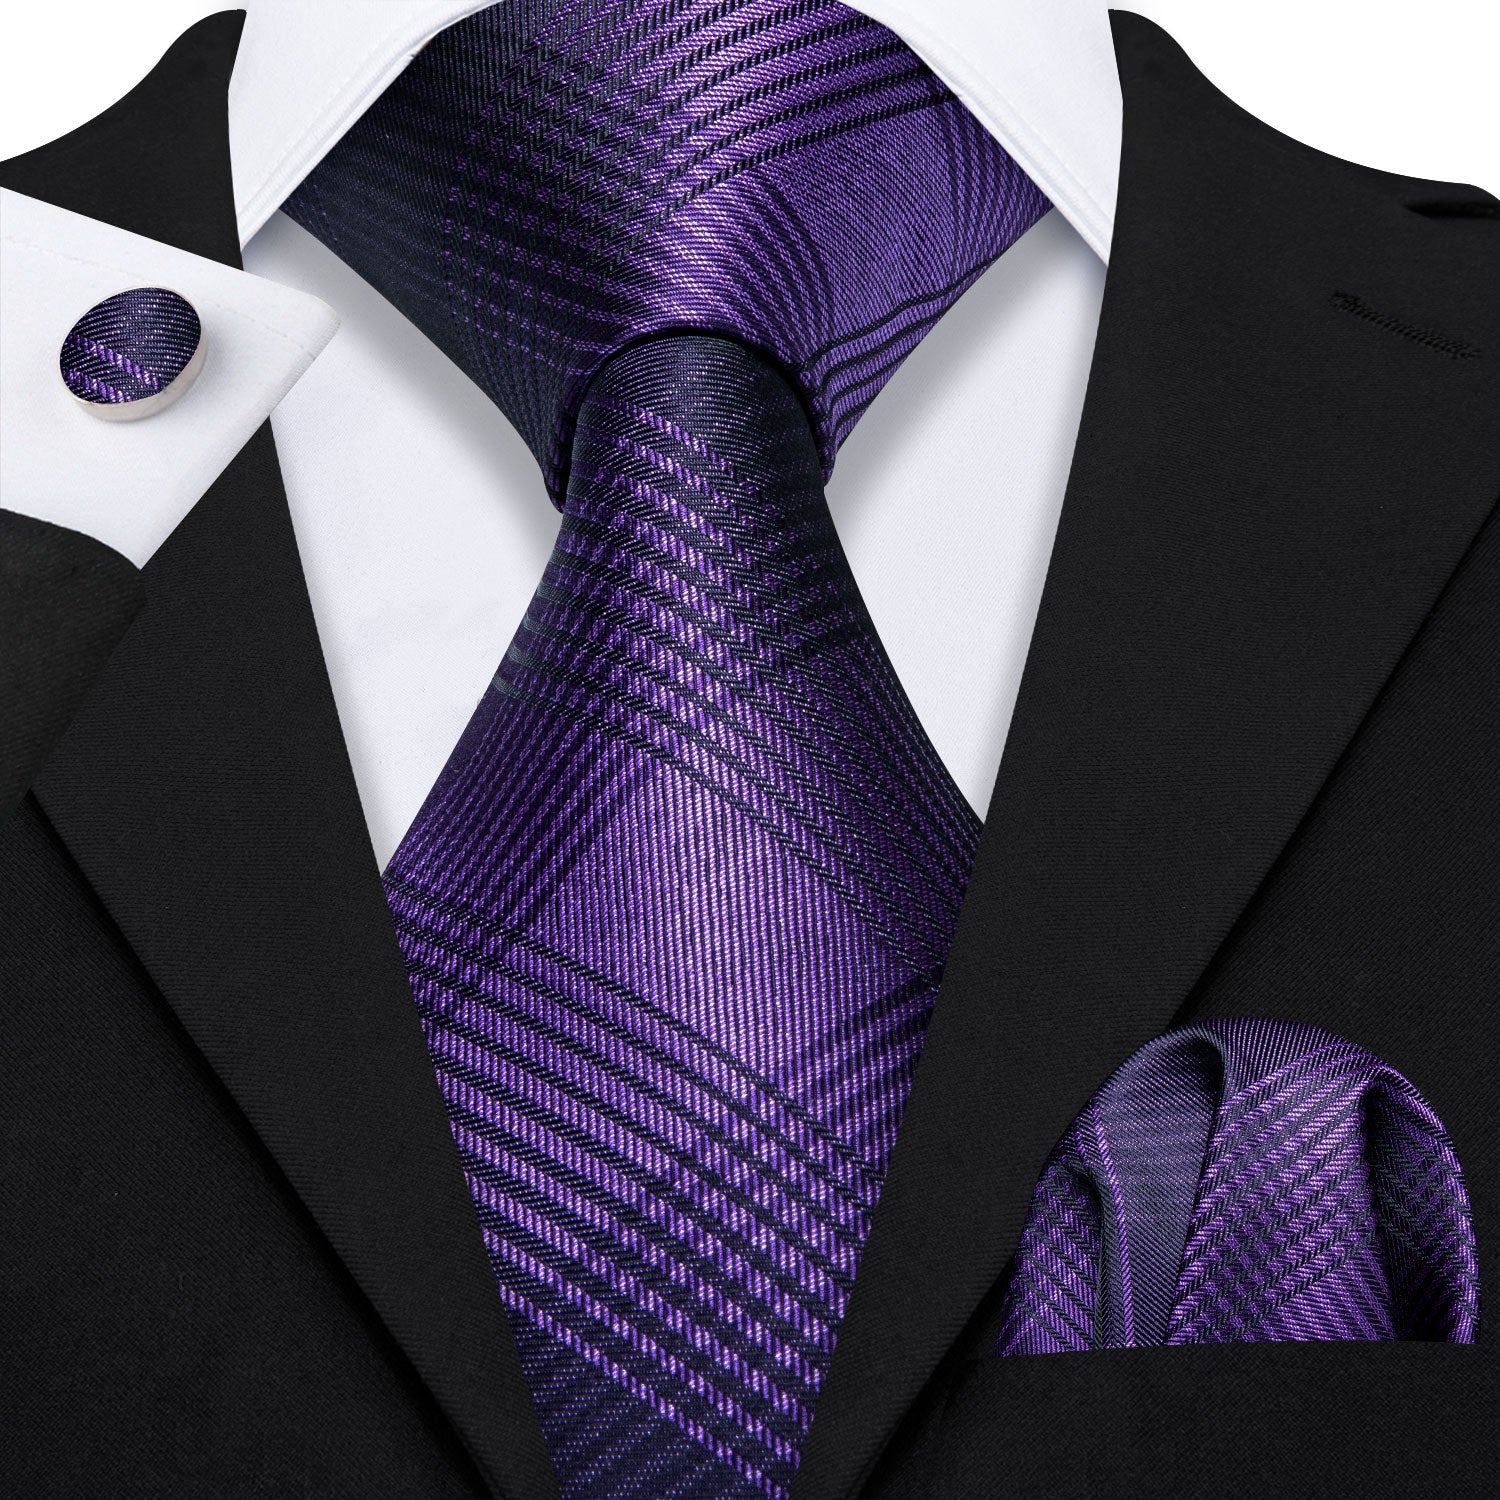 Barry.wang Purple Tie Black Stripe Plaid Tie Hanky Cufflinks Set Classic